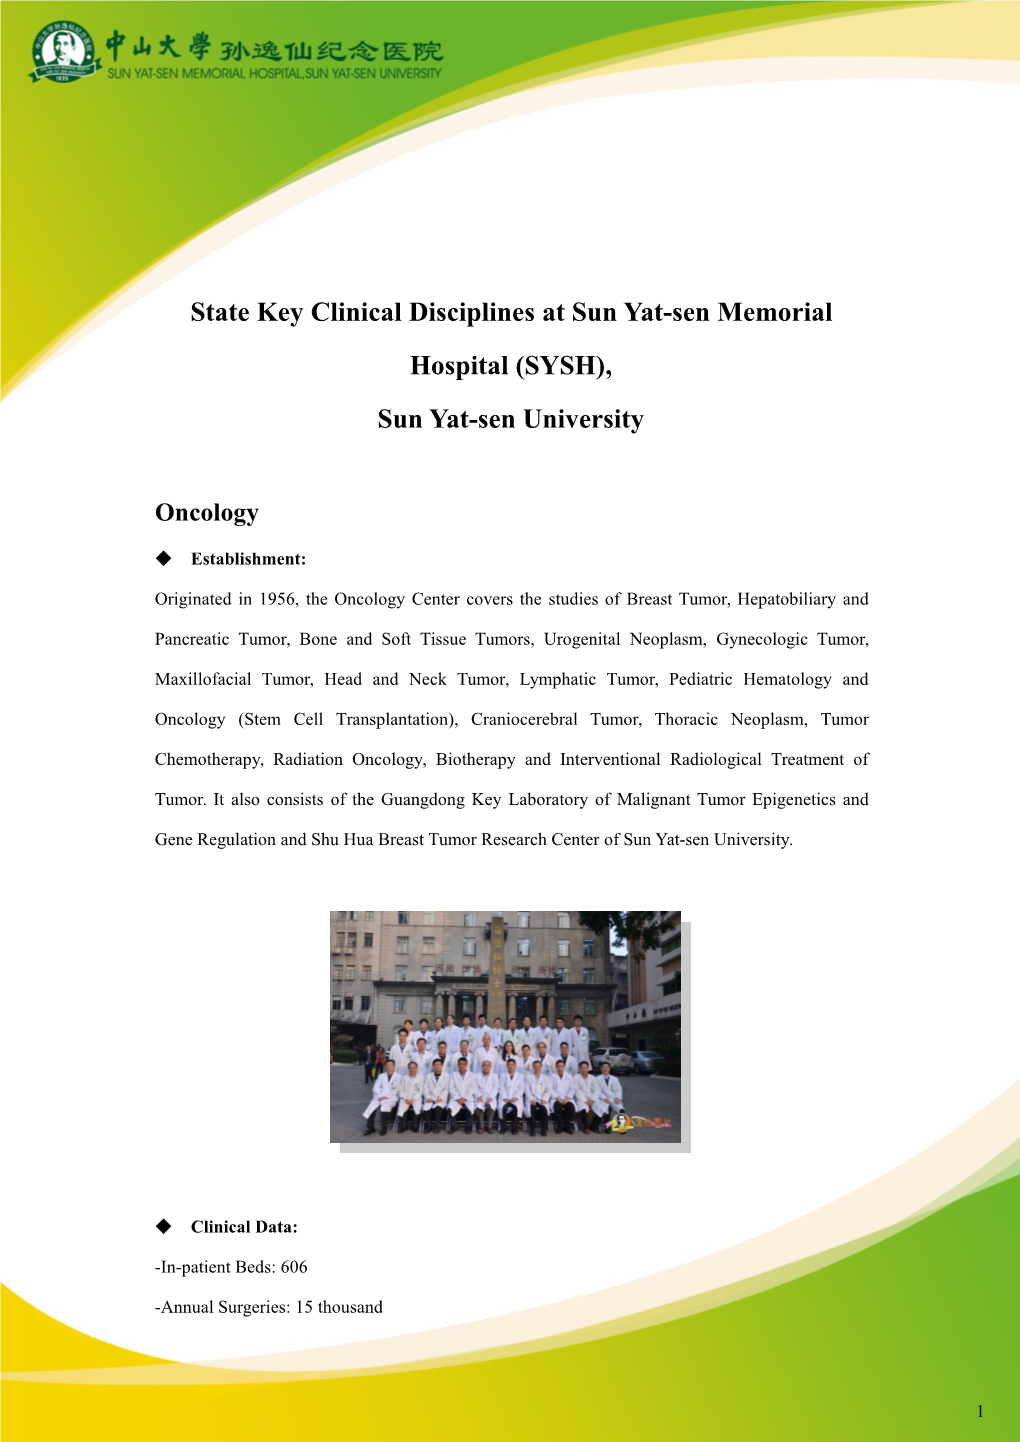 State Key Clinical Disciplines at Sun Yat-Sen Memorial Hospital (SYSH), Sun Yat-Sen University